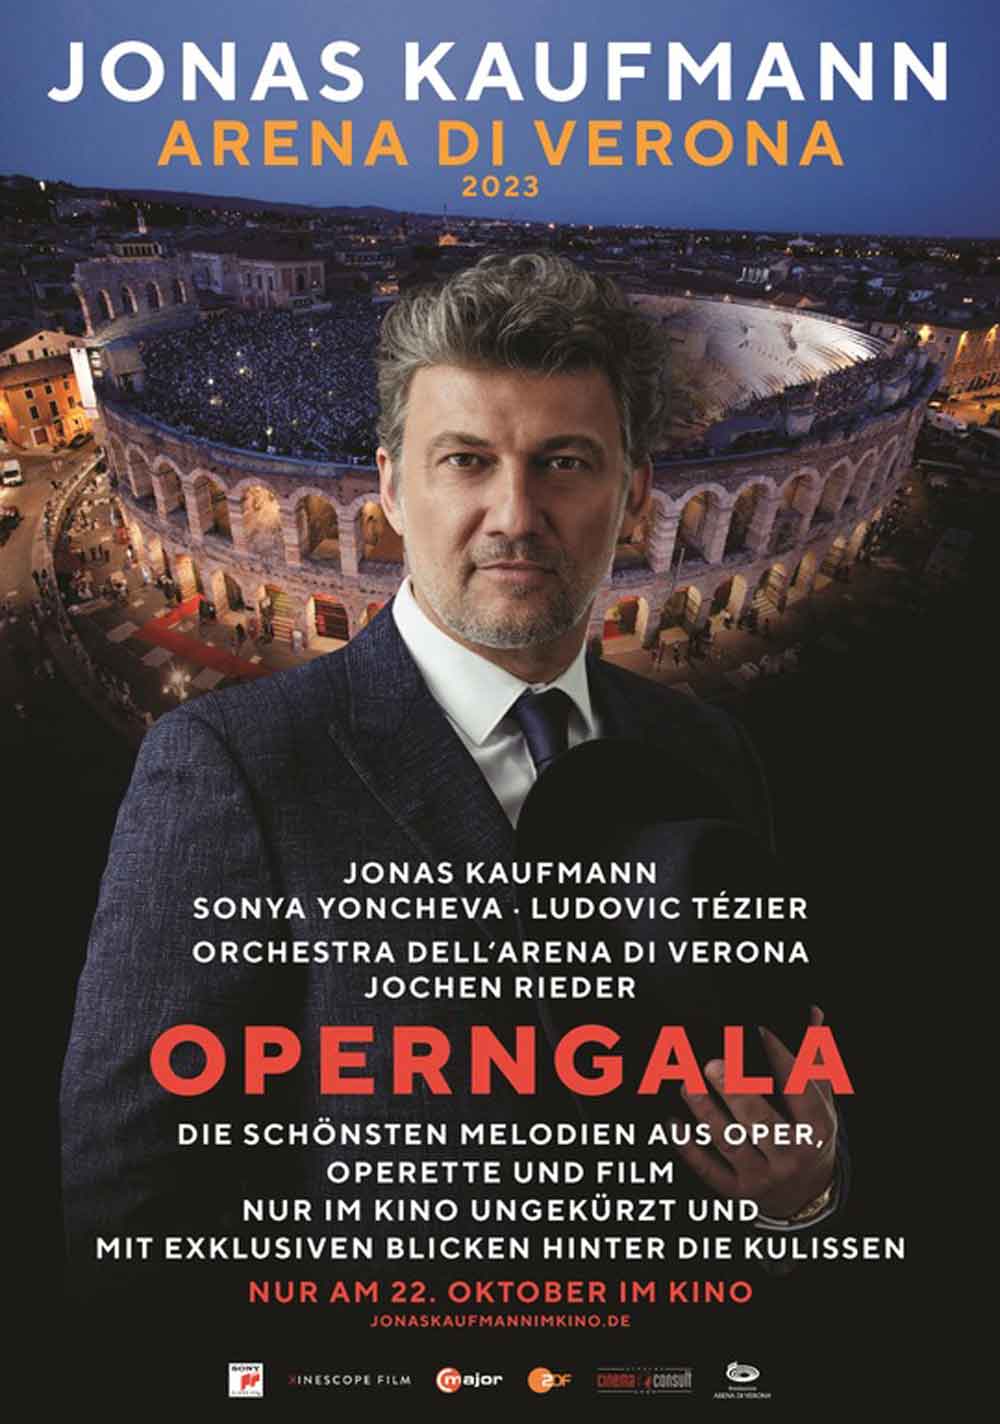 Kino in Gütersloh und anderswo: Nur am 22. Oktober 2023: Jonas Kaufmann, »Arena di Verona 2023«